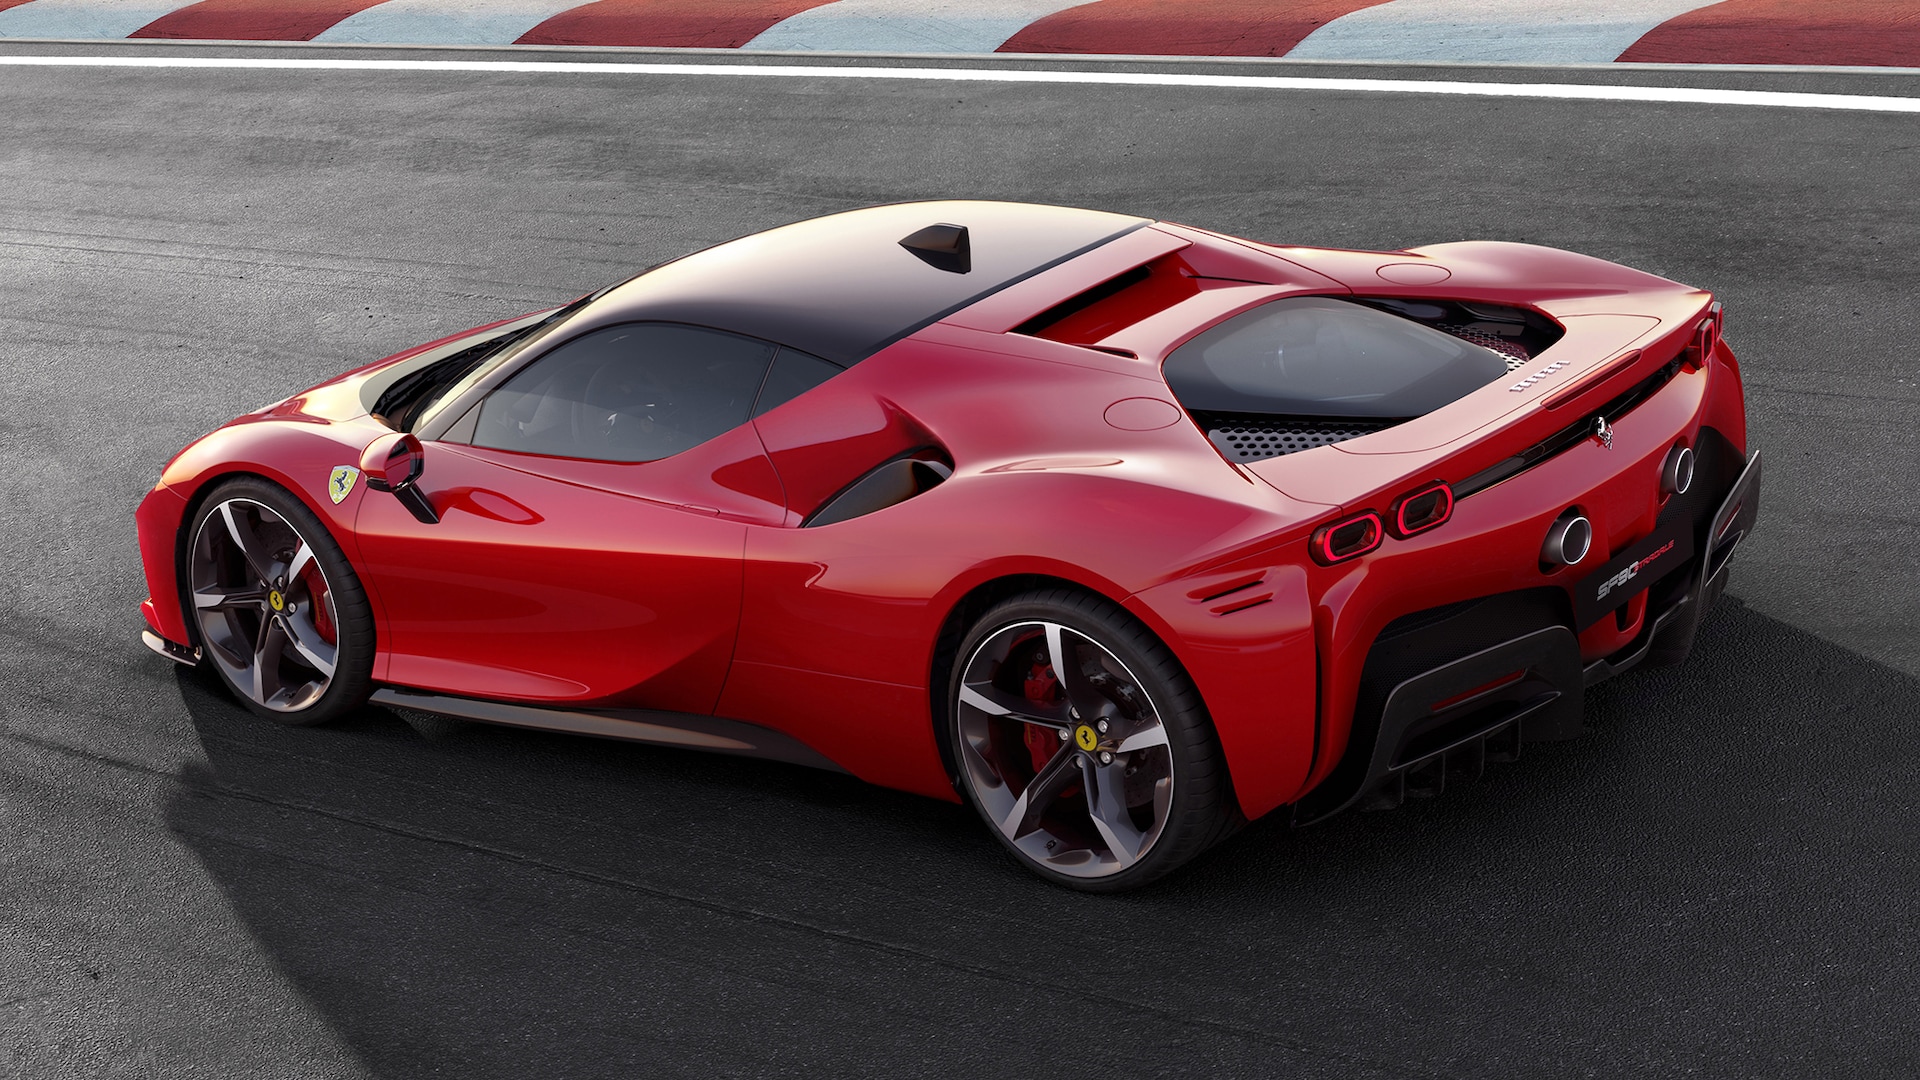 2021 Ferrari SF90 Stradale: What Makes It the Fastest Ferrari Road Car Ever?